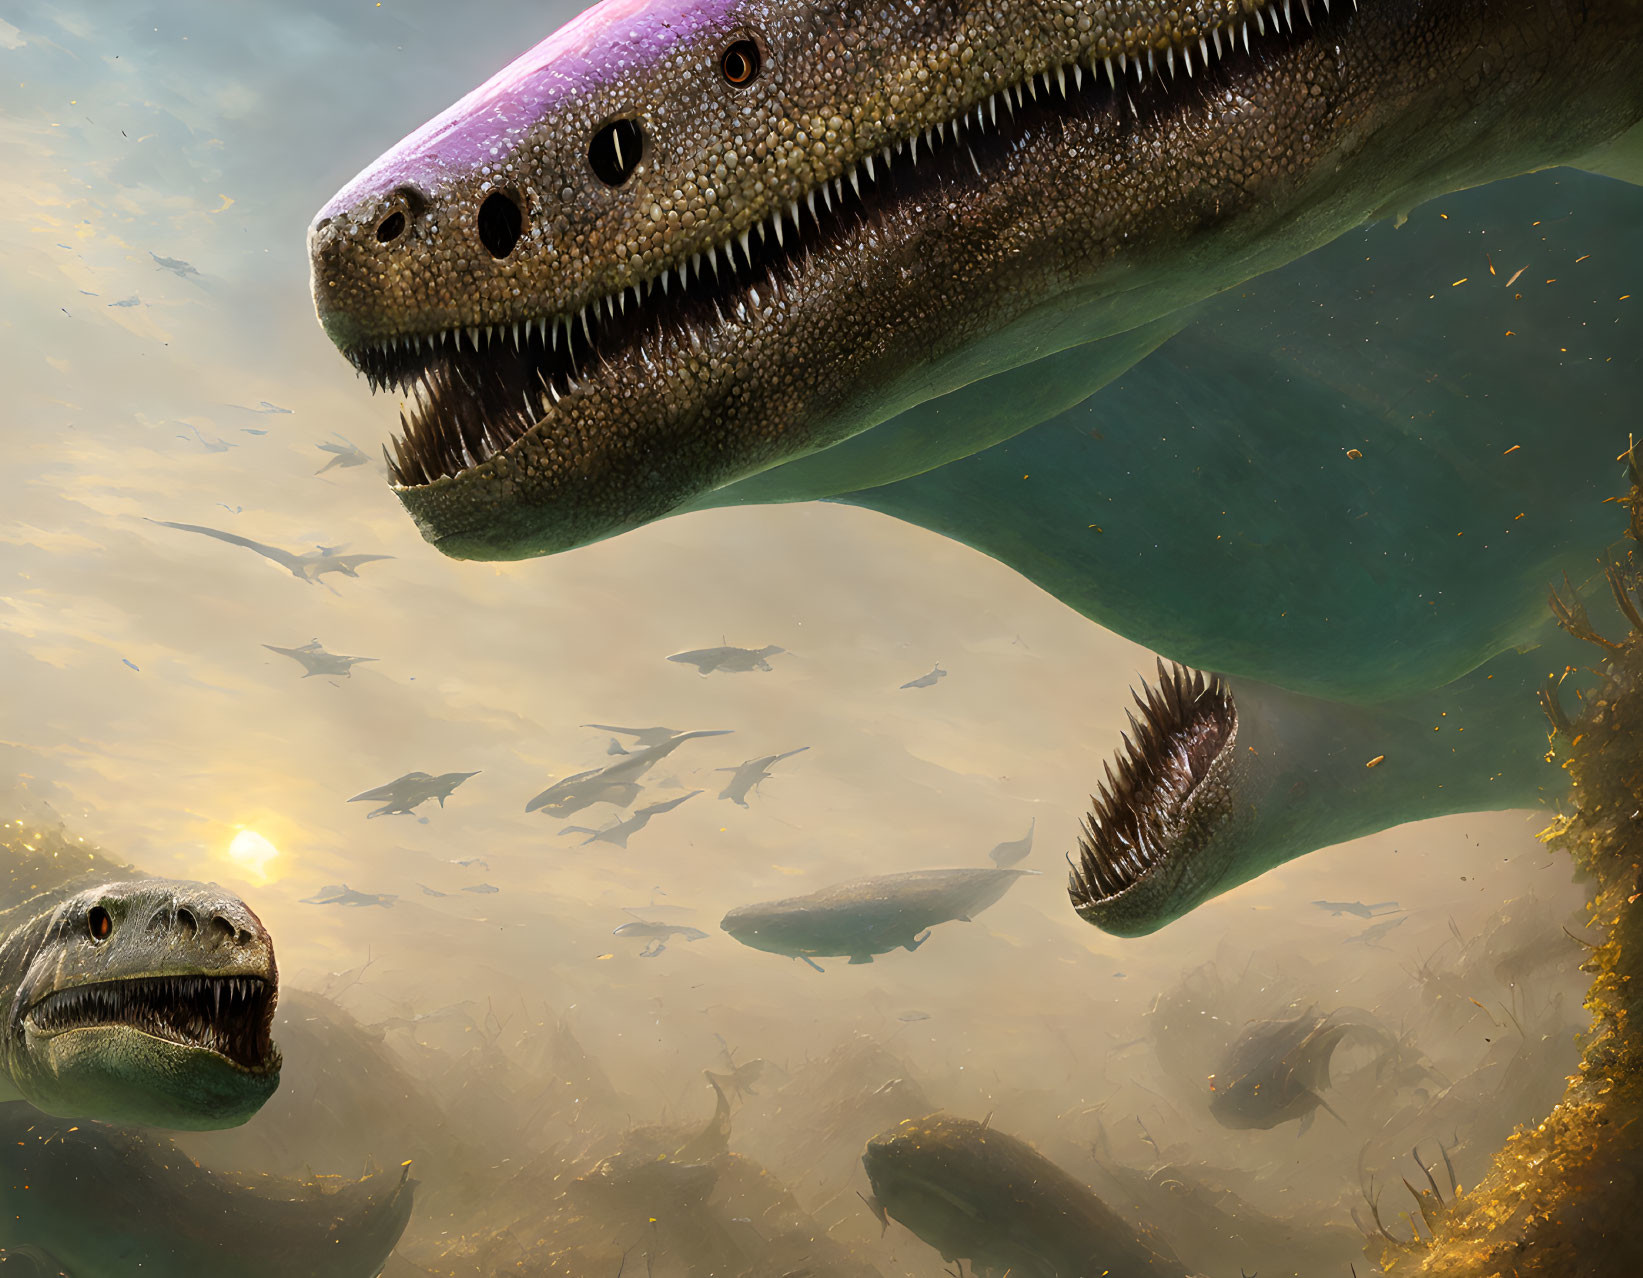 Prehistoric marine reptiles swimming with fish in sunlit underwater scene